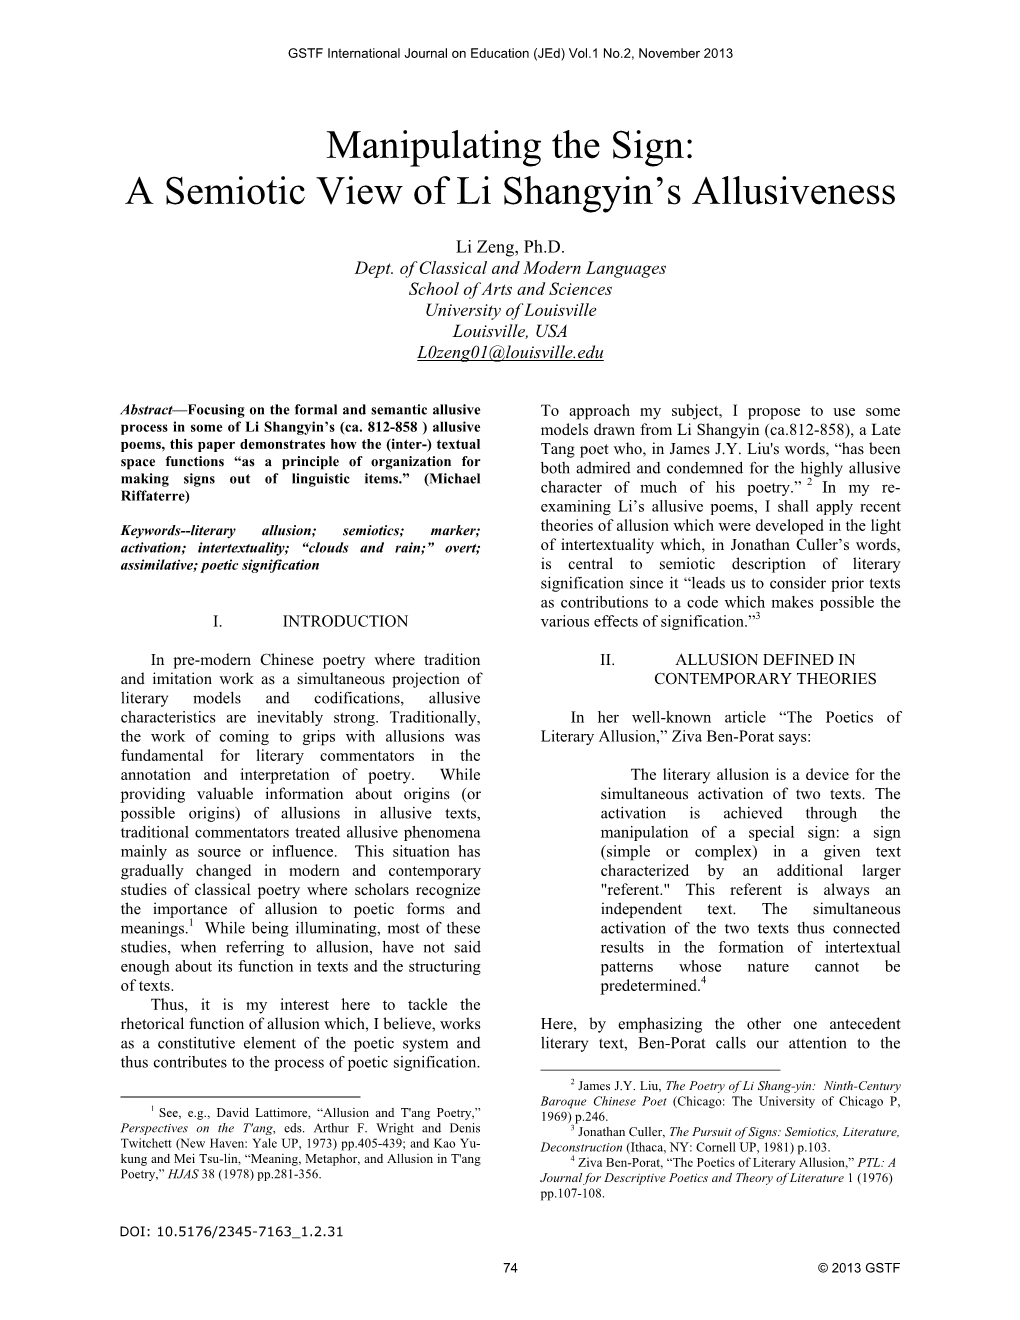 A Semiotic View of Li Shangyin's Allusiveness